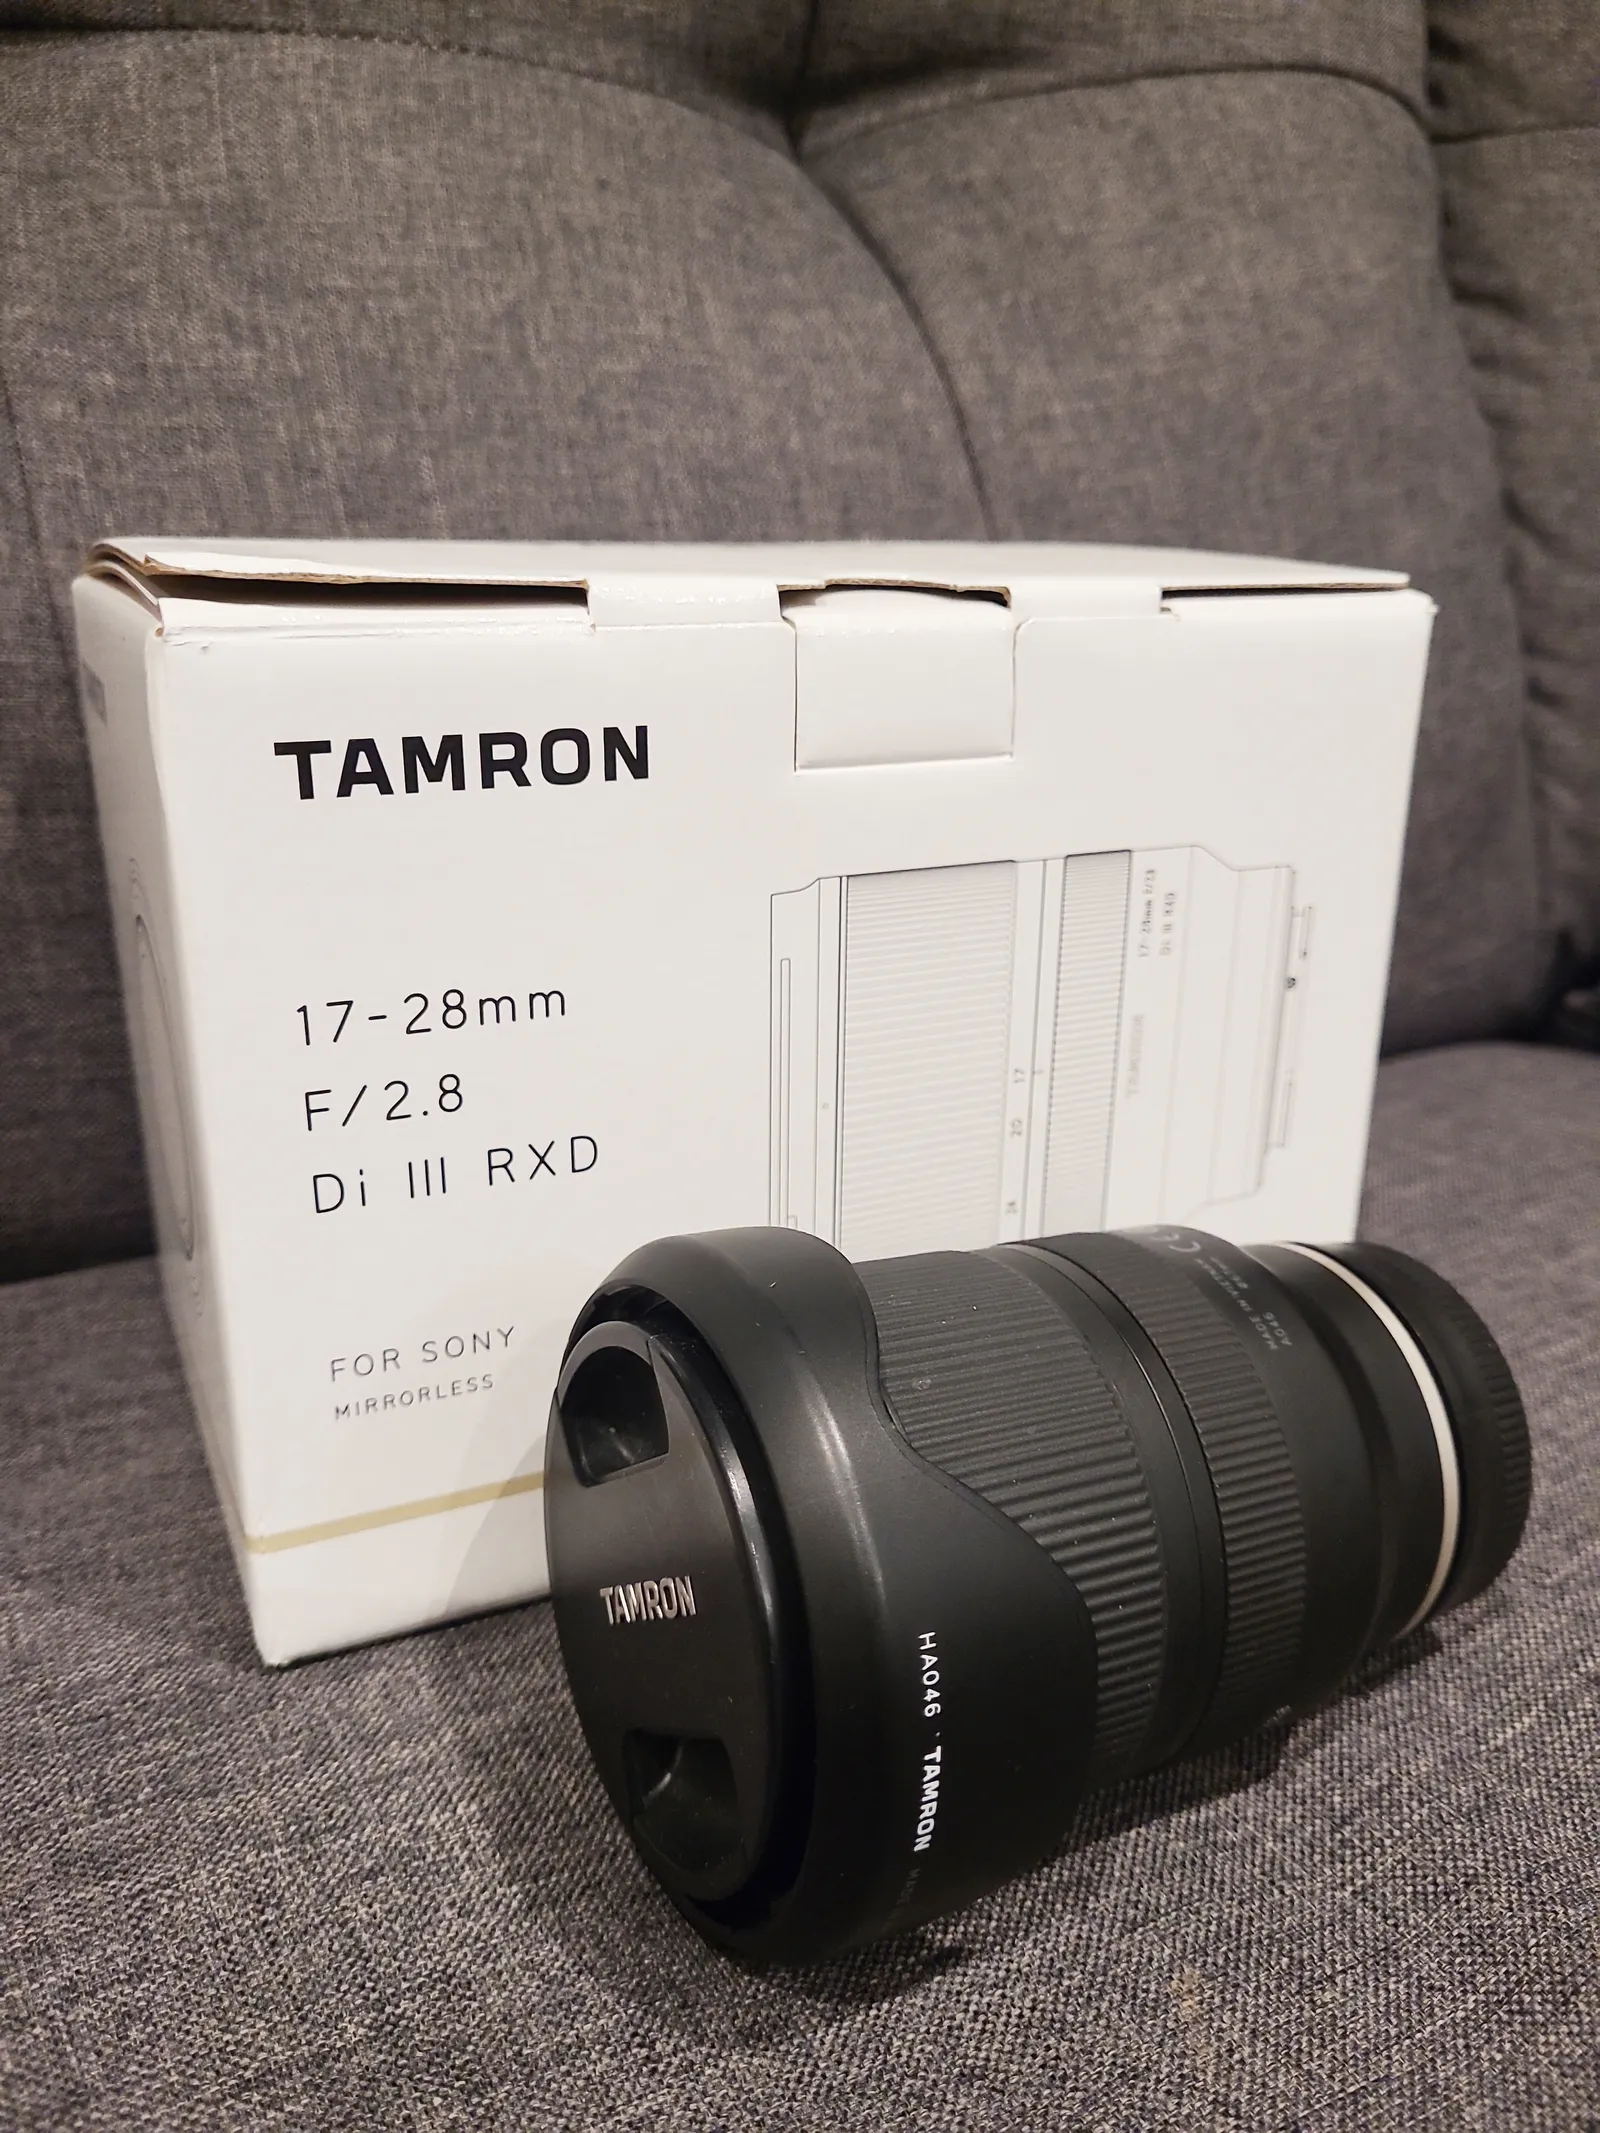 Tamron 17-28mm Di III RXD Full Frame Ultrawide Lens. Sony Full